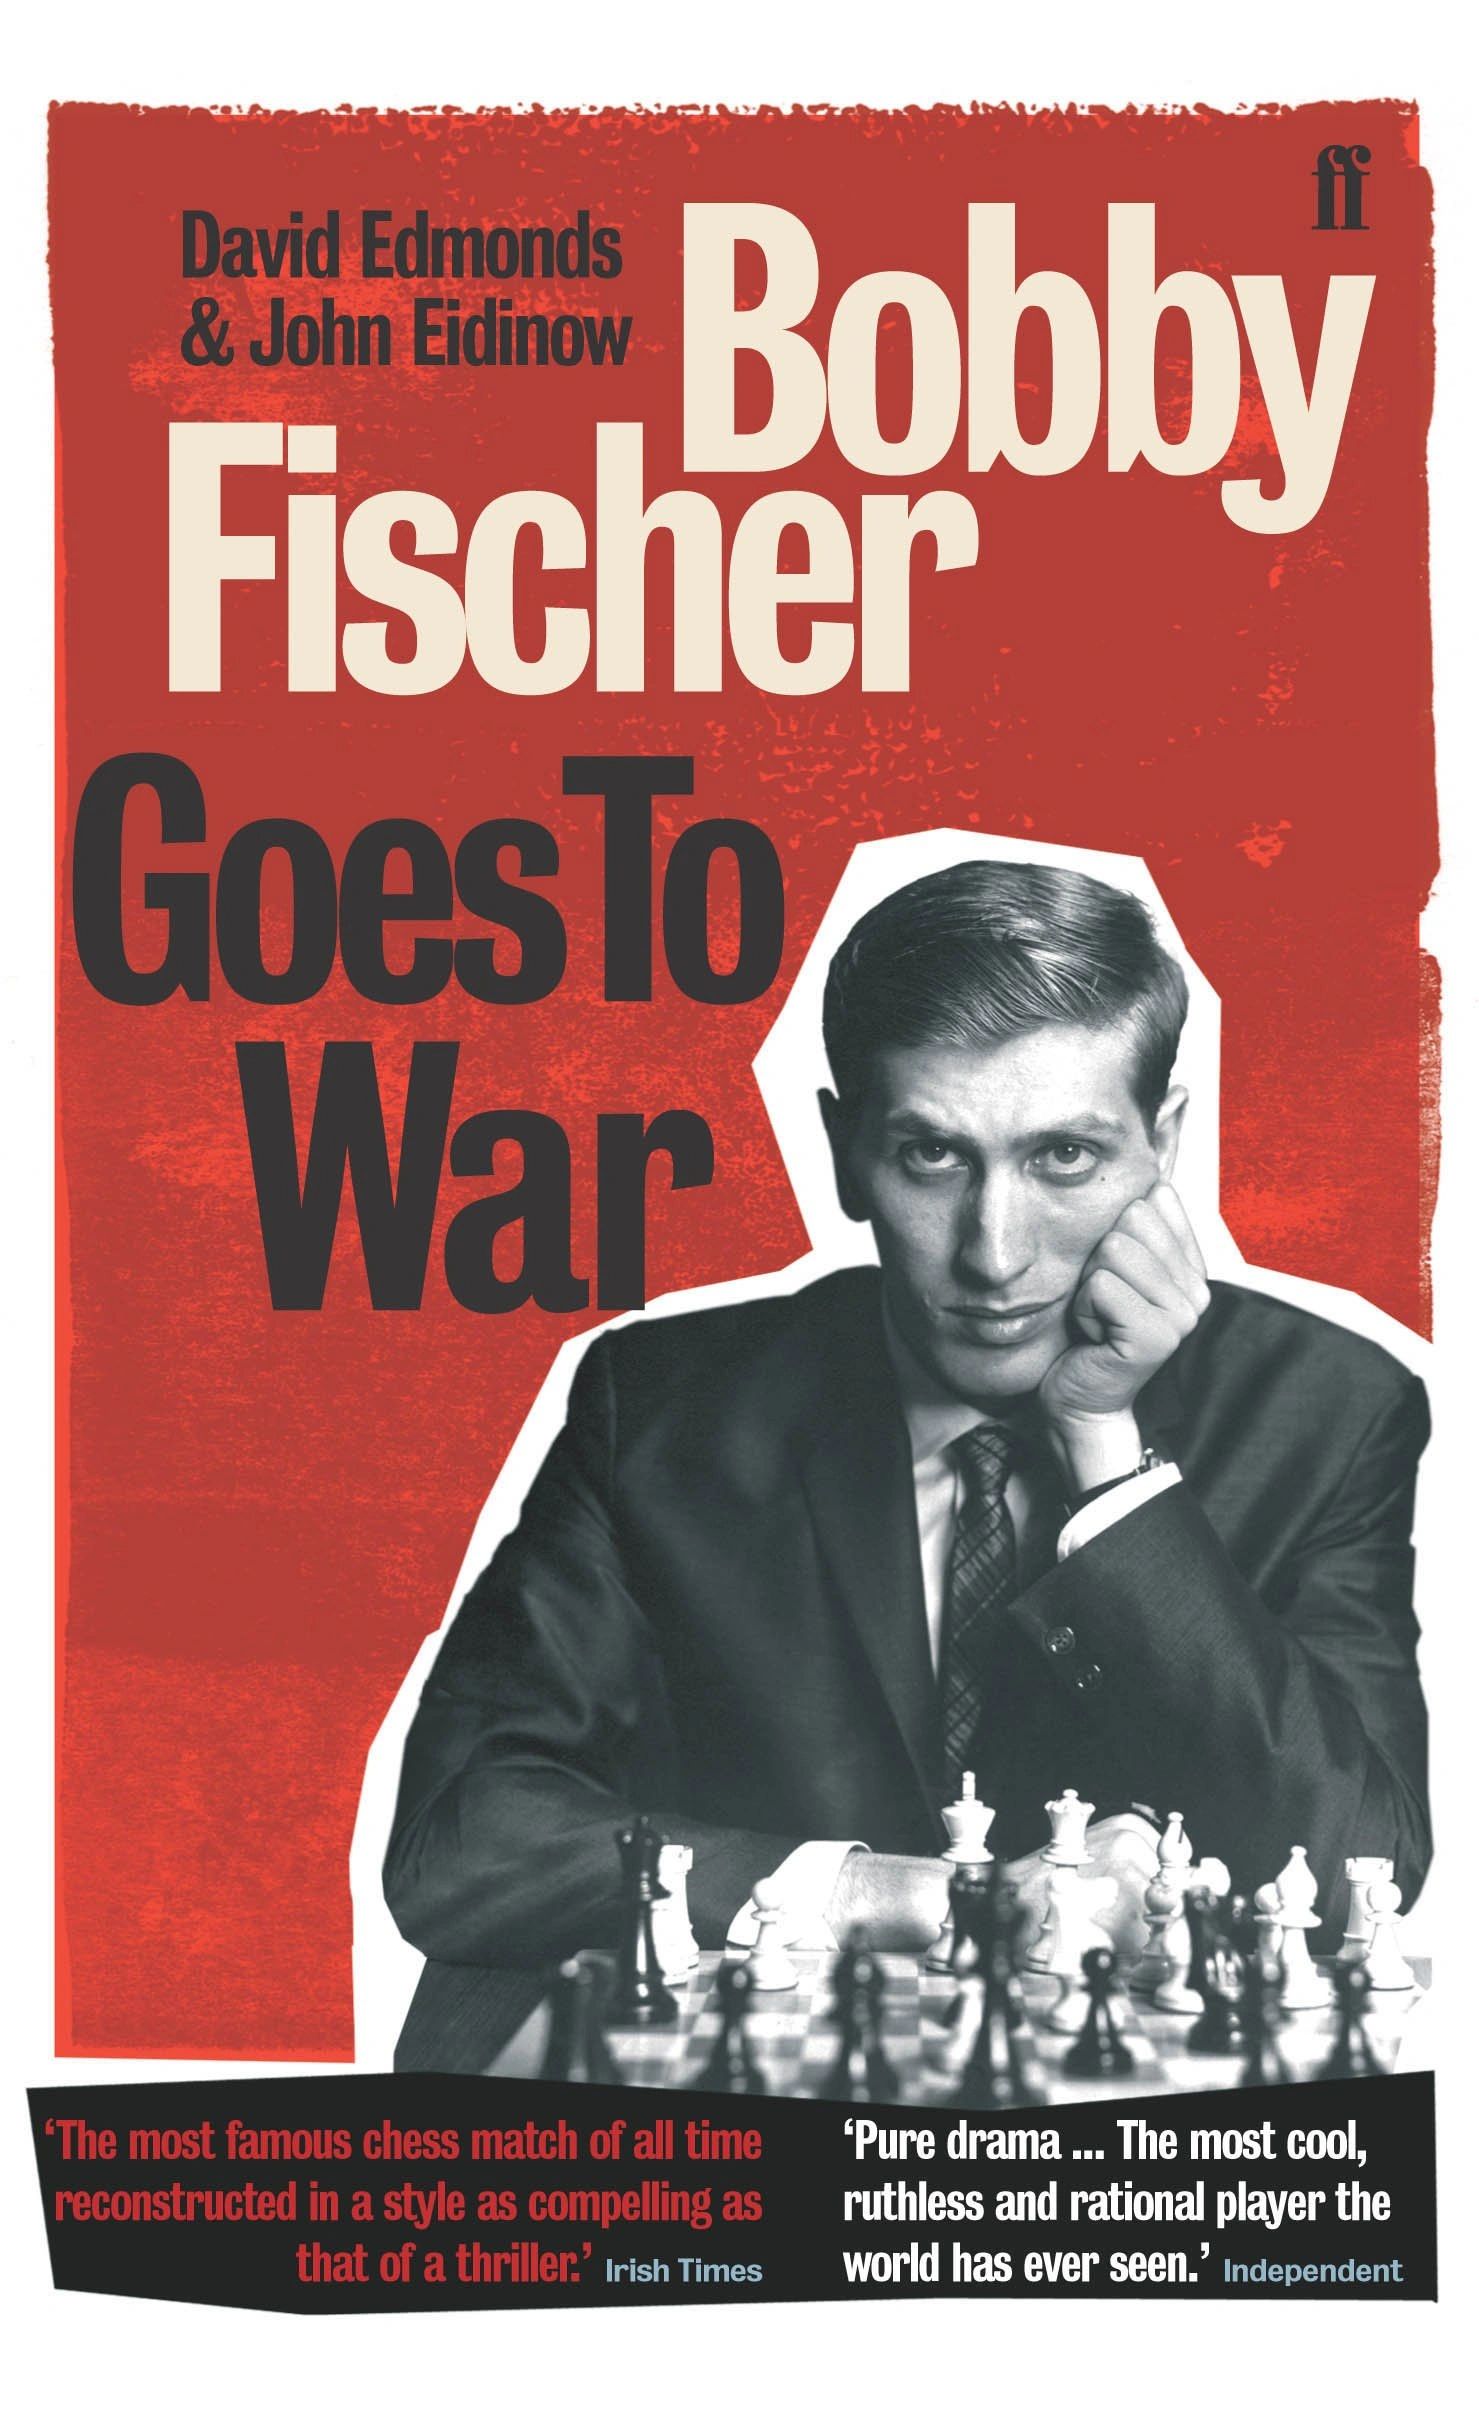 Endgame riddle: Fischer vs Spassky - Game 10